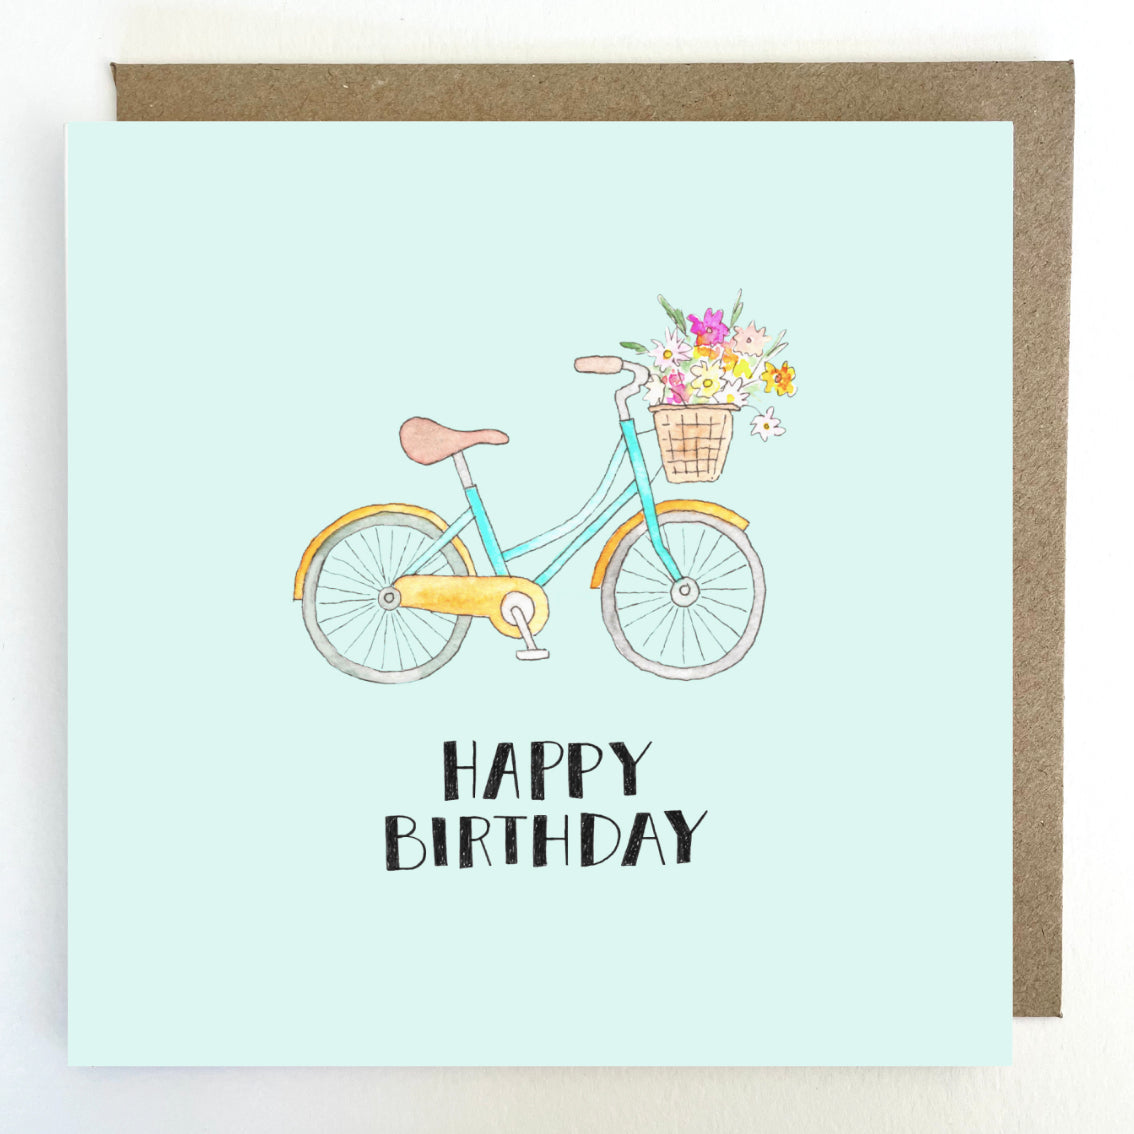 K272 'Bike with Flowers' Happy Birthday Greetings Card